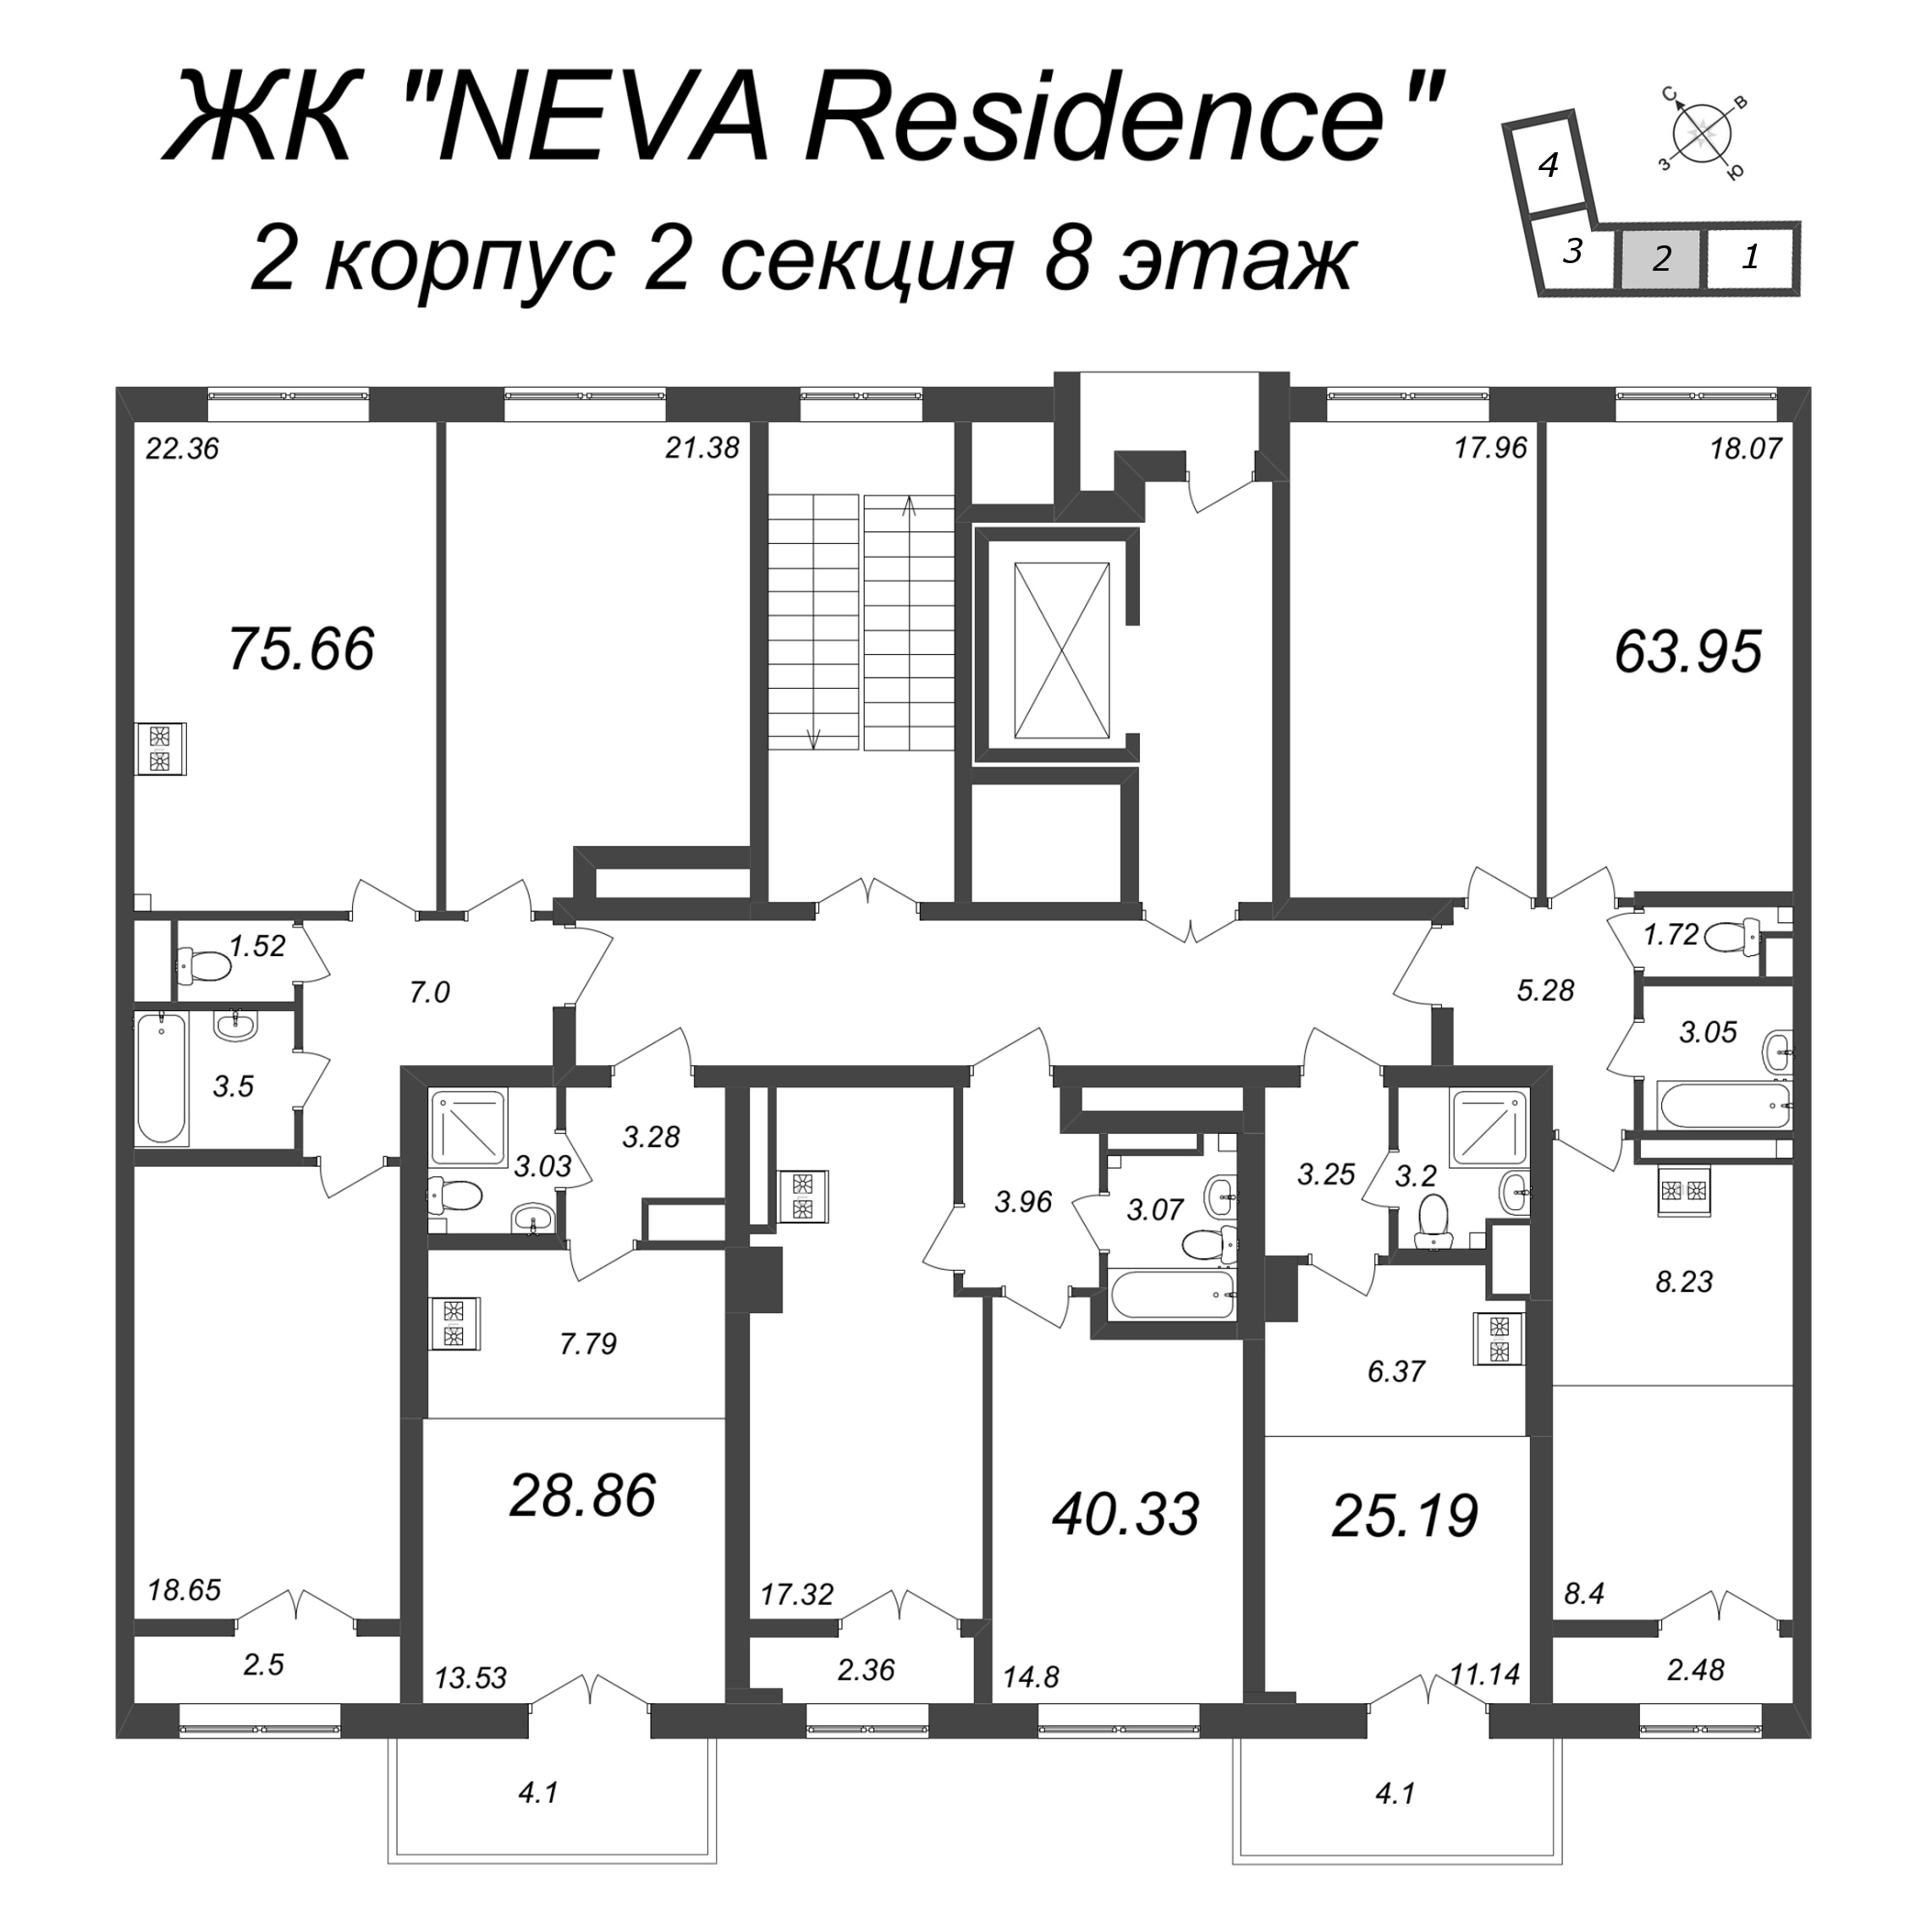 3-комнатная (Евро) квартира, 63.95 м² - планировка этажа